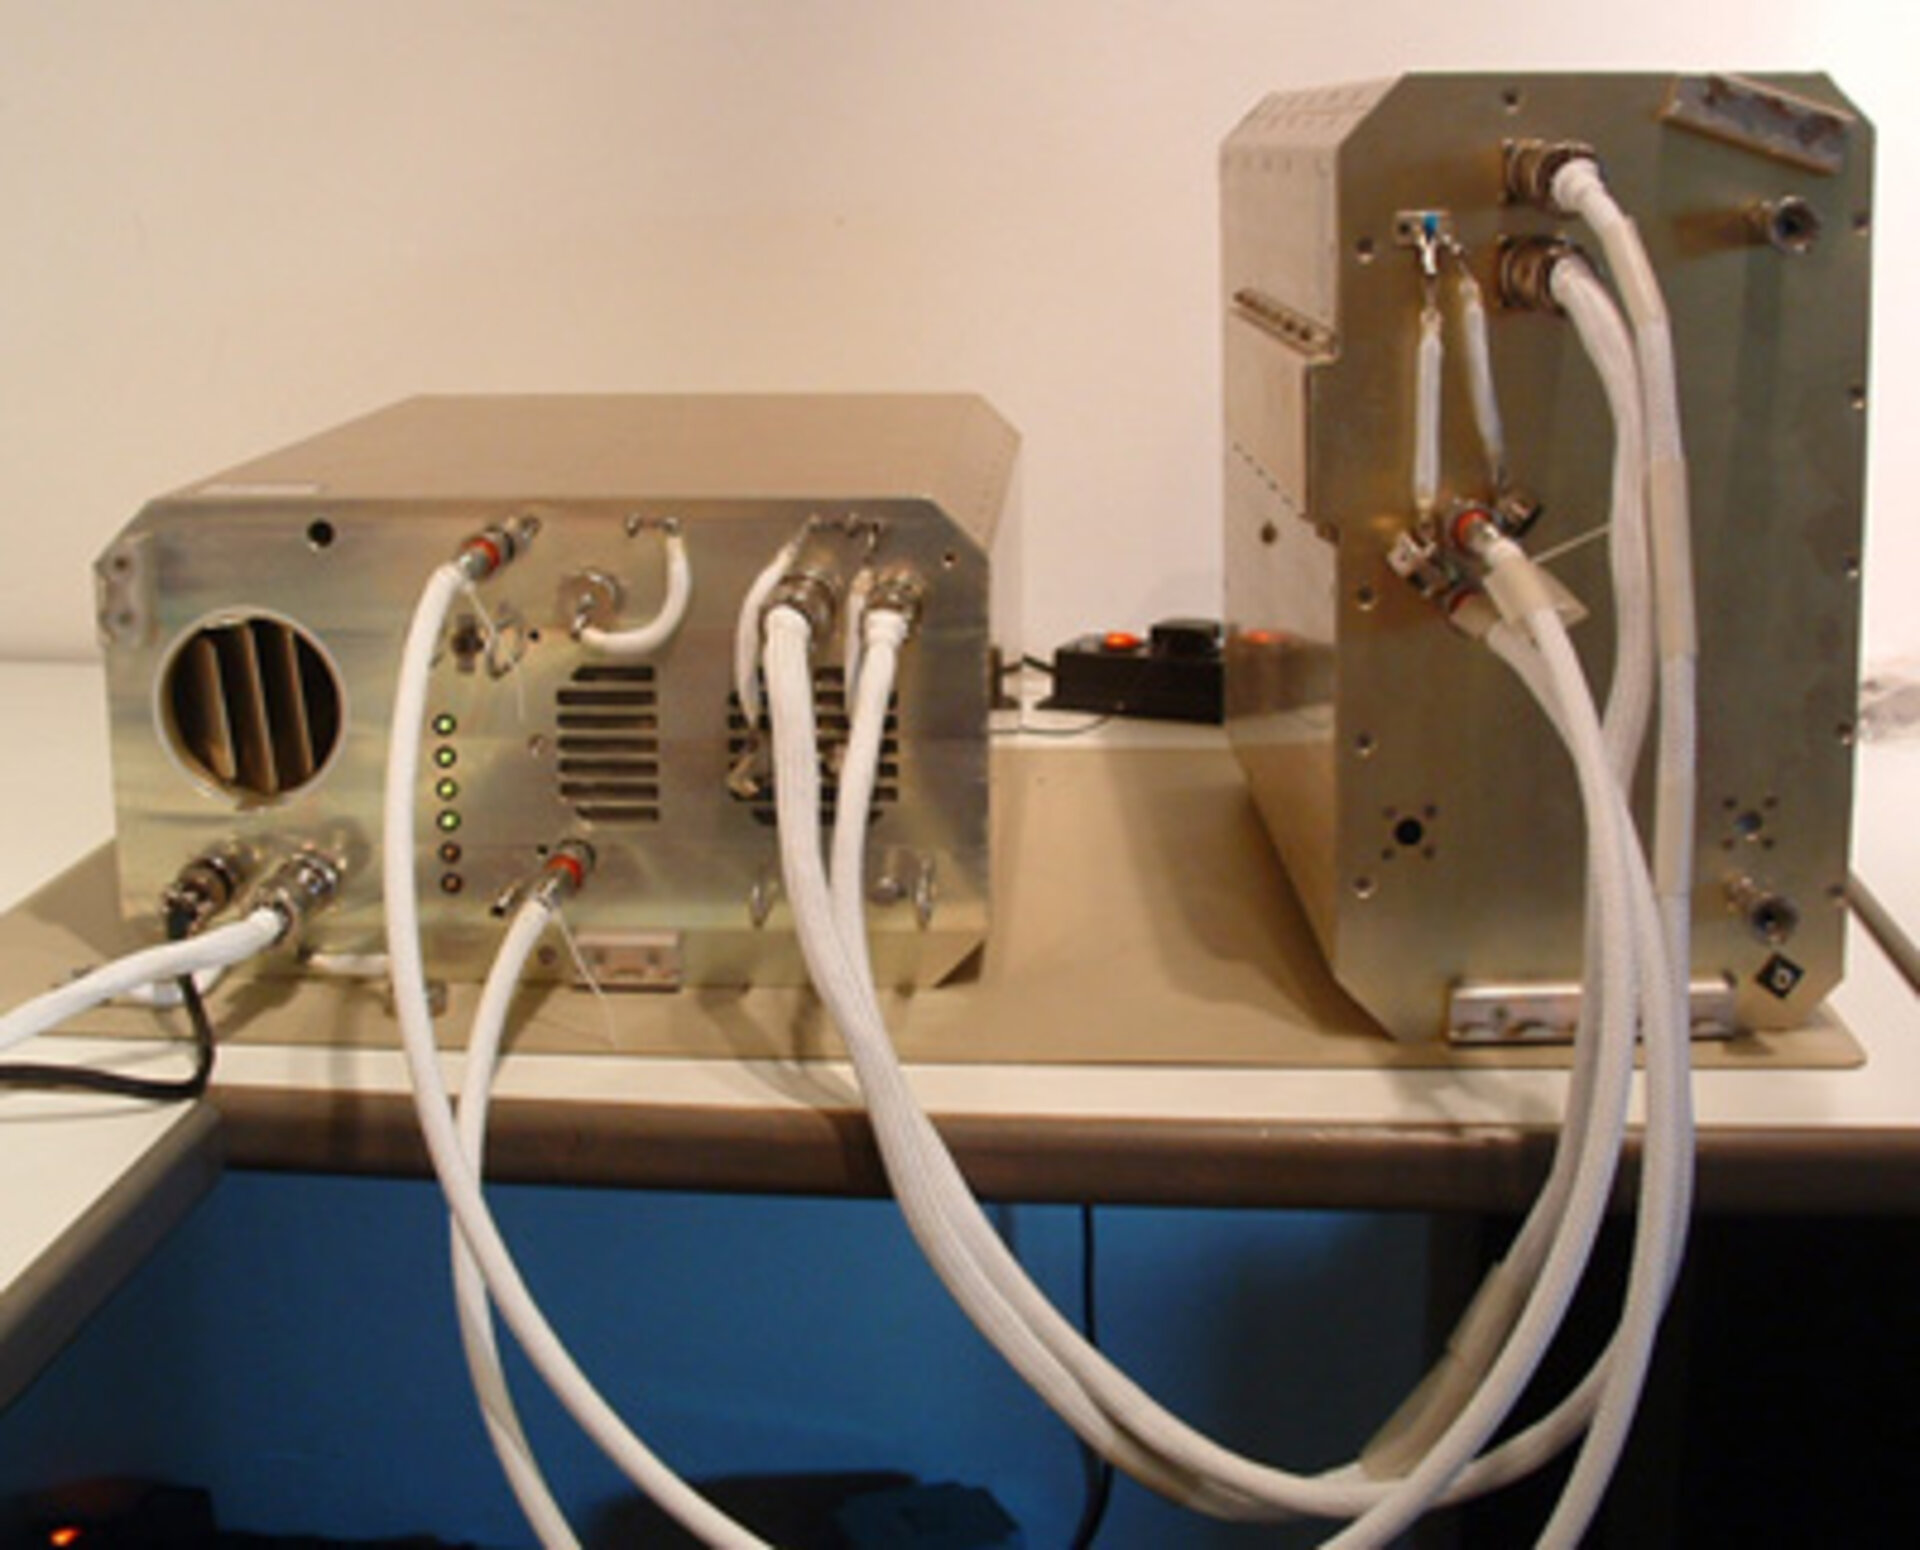 ANITA (Analysing Interferometer for Ambient Air)